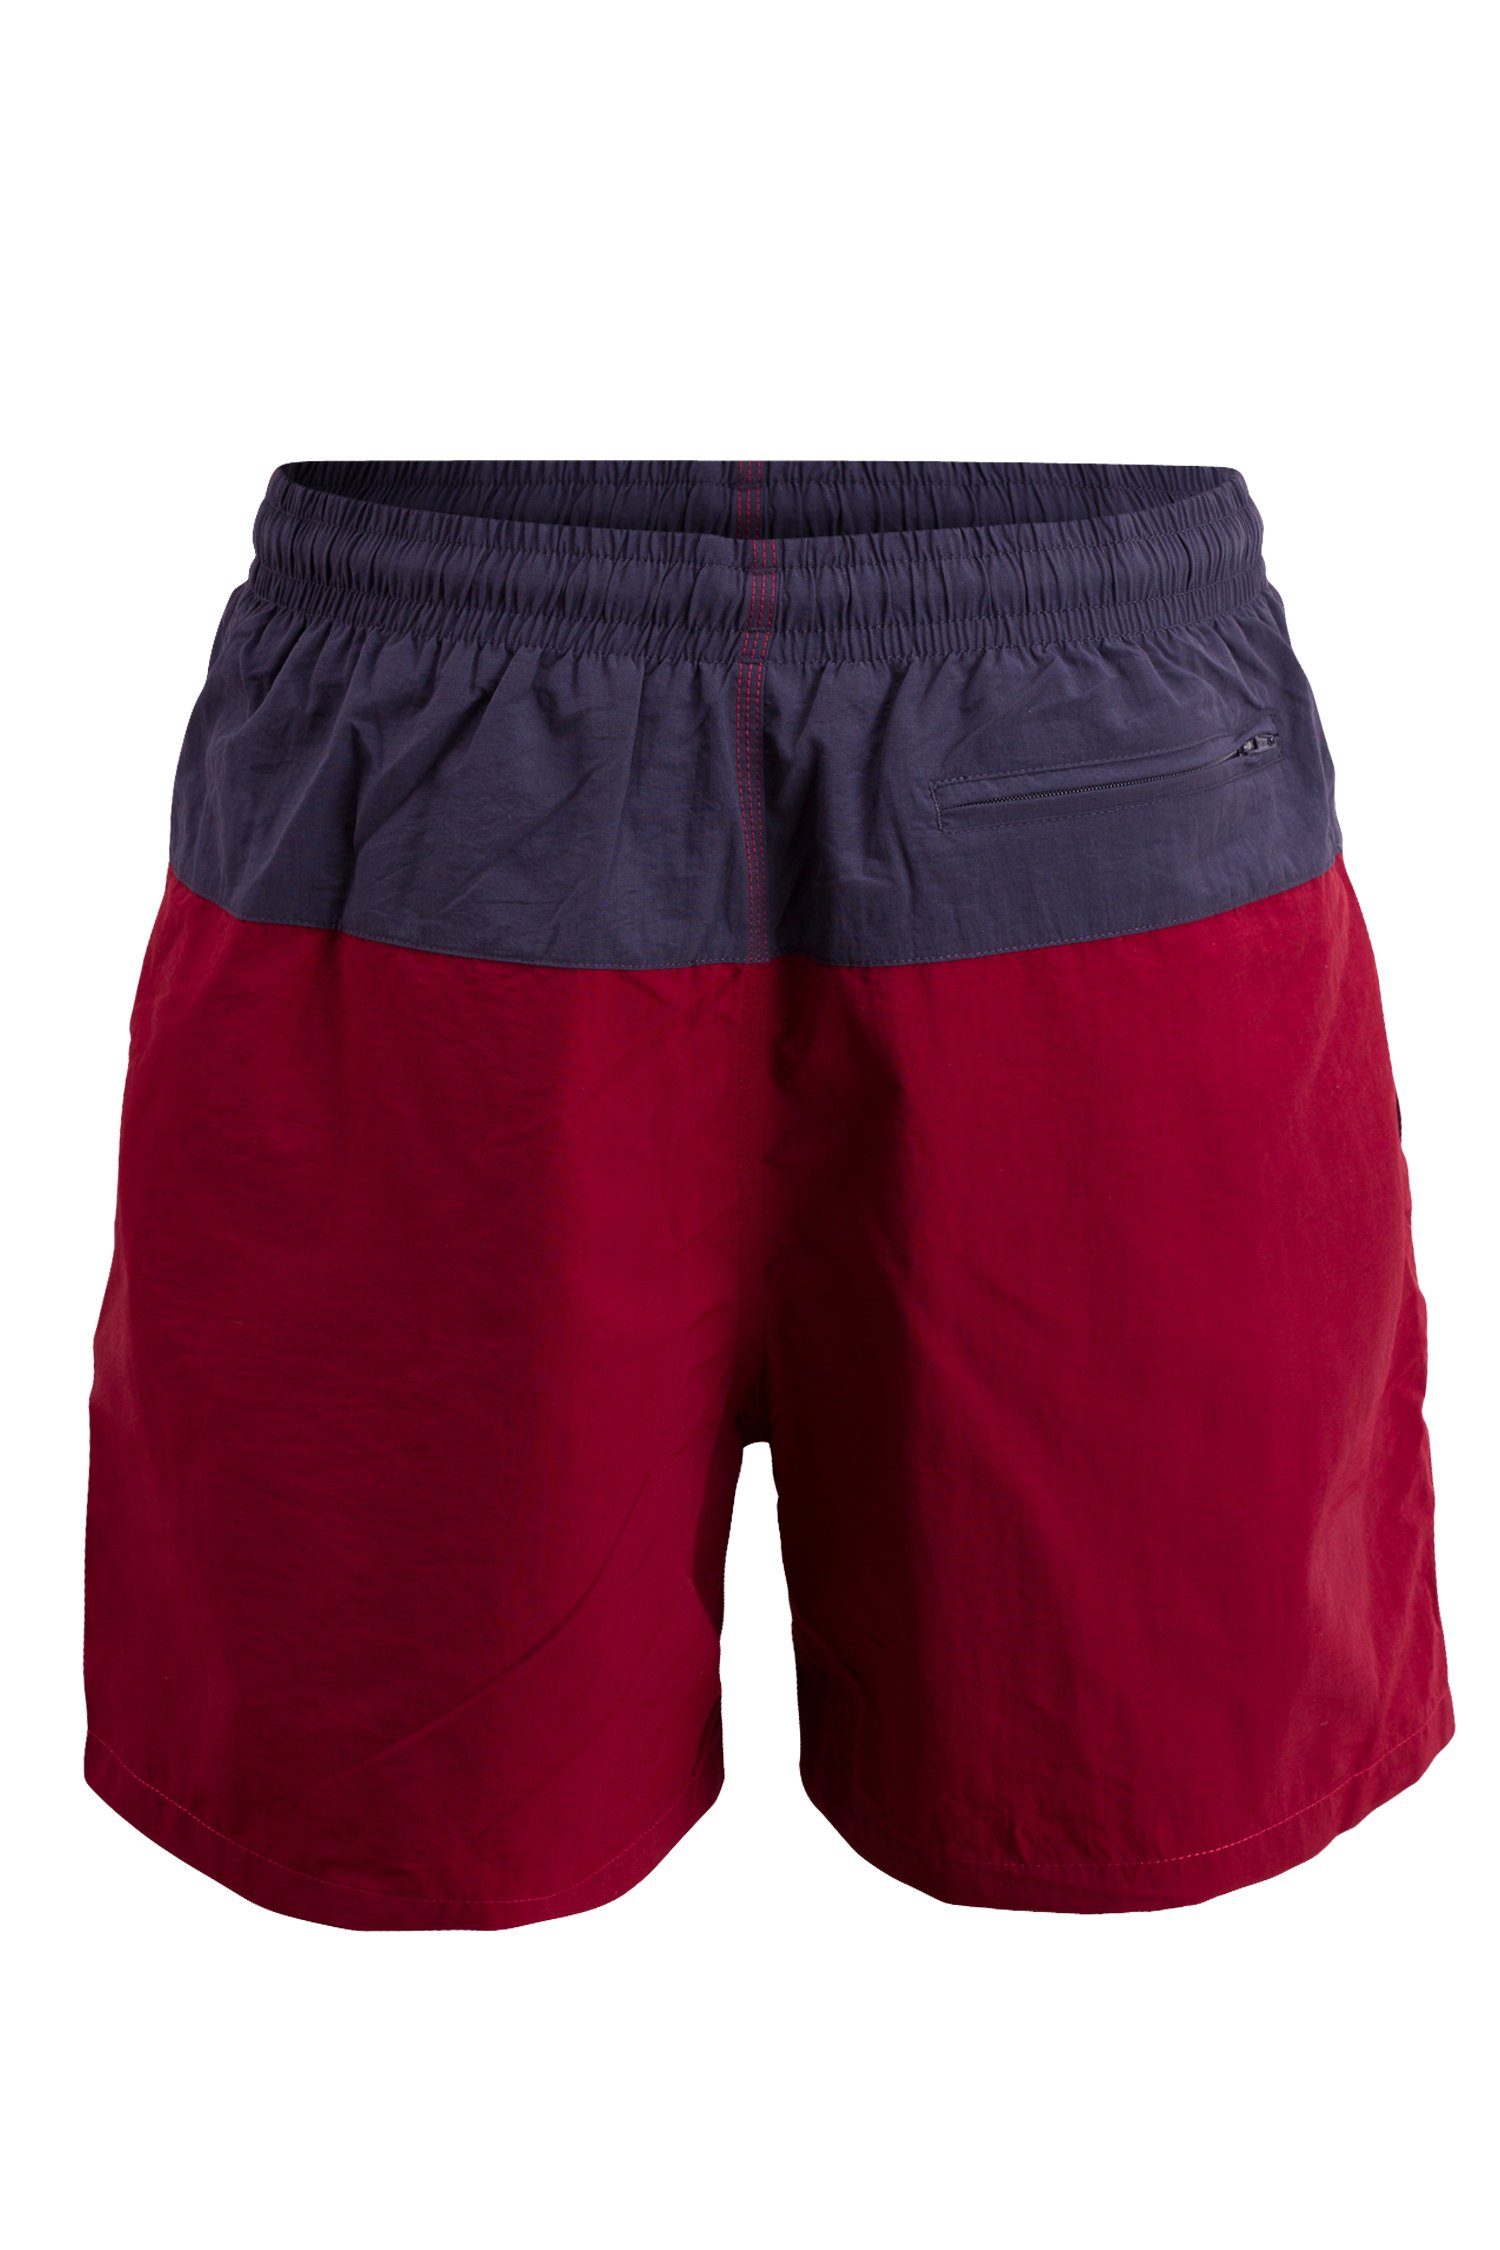 Red/Navy Shorts - Manufaktur13 Swim Badeshorts Badehosen schnelltrocknend